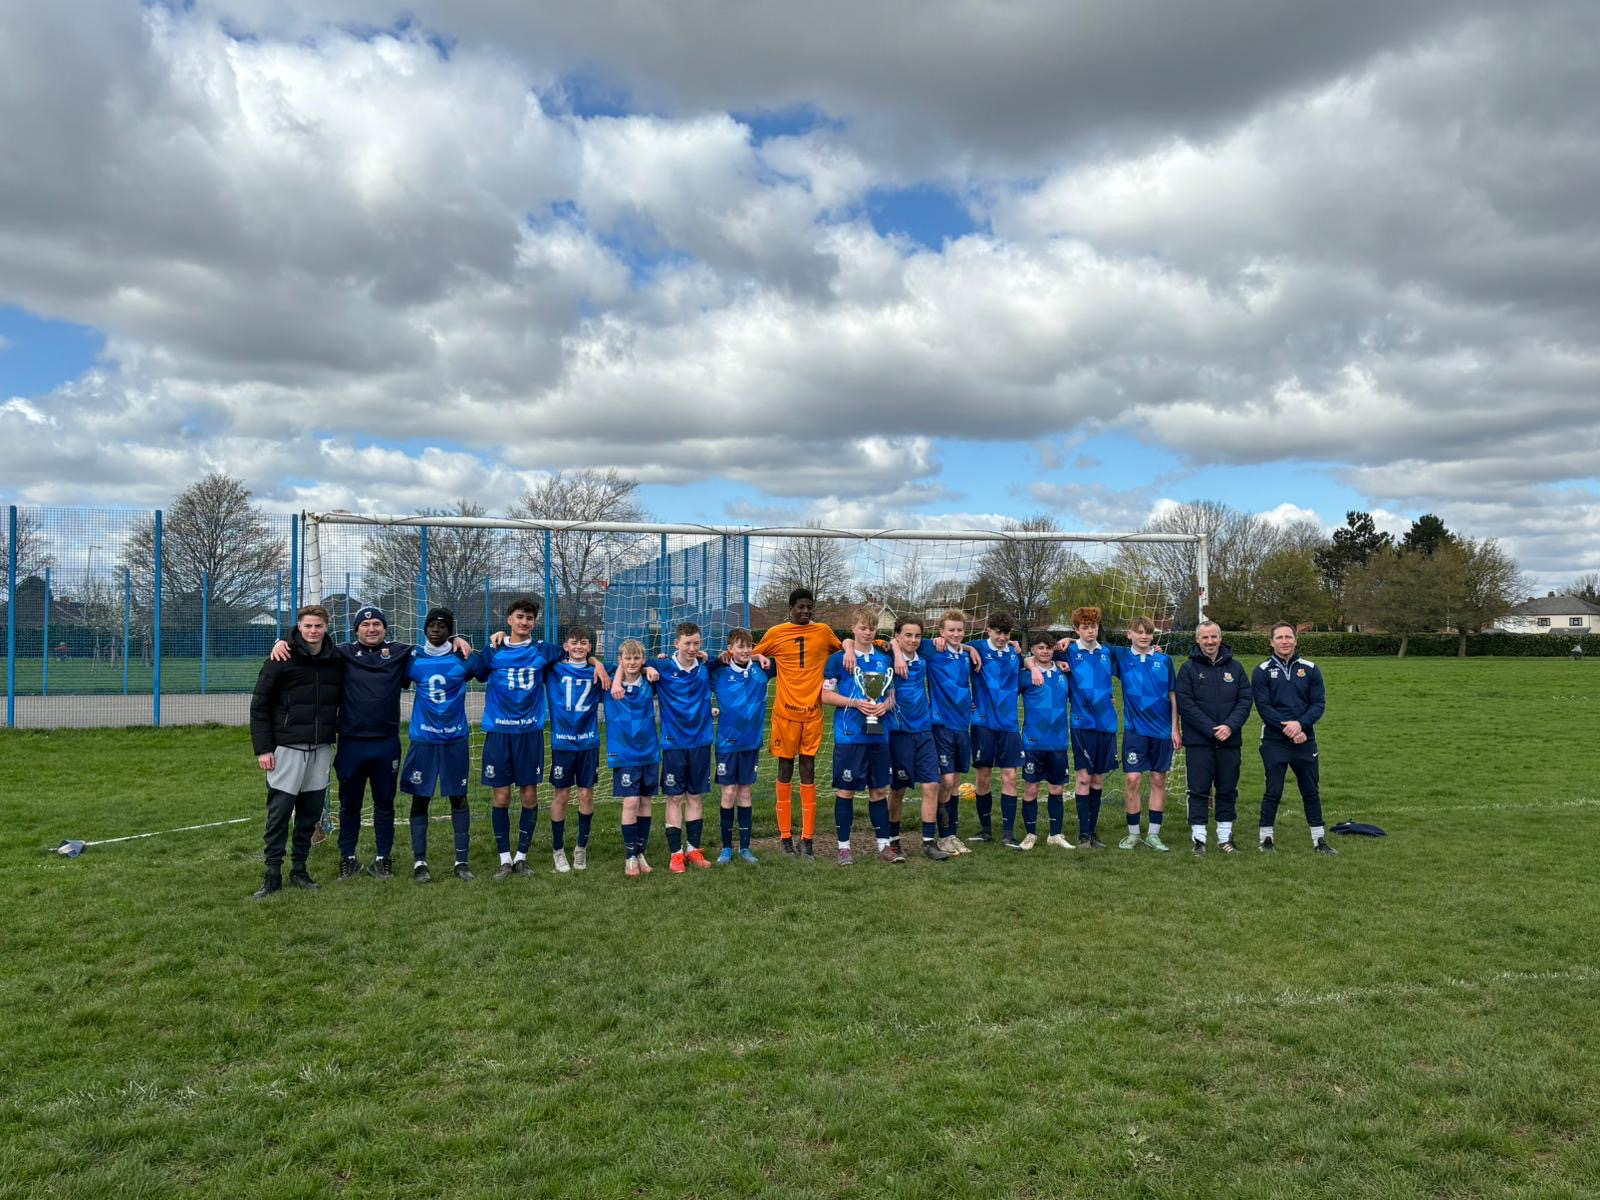 Wealdstone Youth FC Team Photo